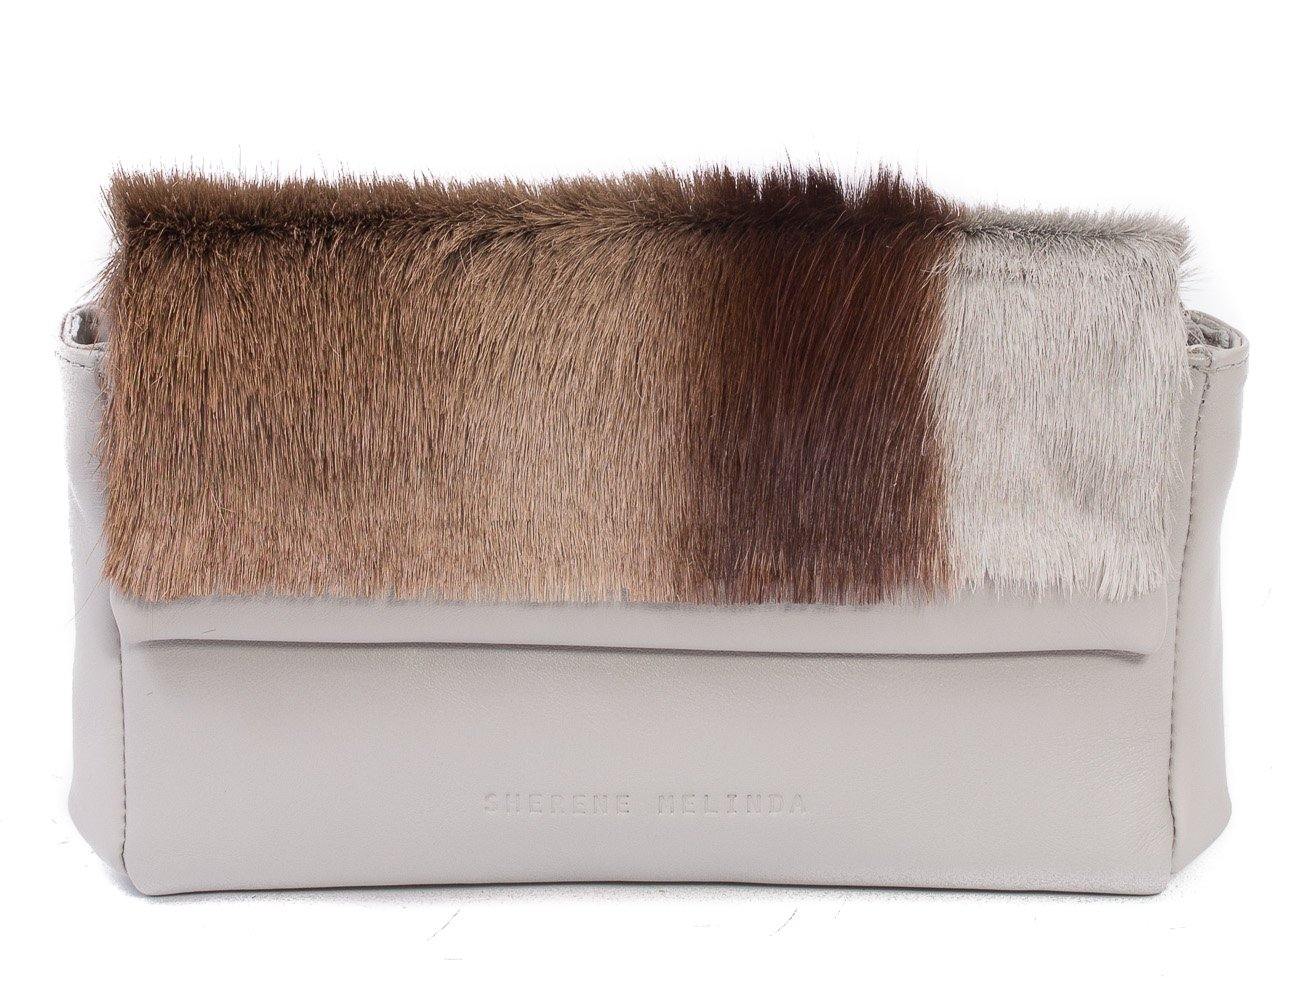 sherene melinda springbok hair-on-hide earth leather Sophy SS18 Clutch Bag stripe front strap